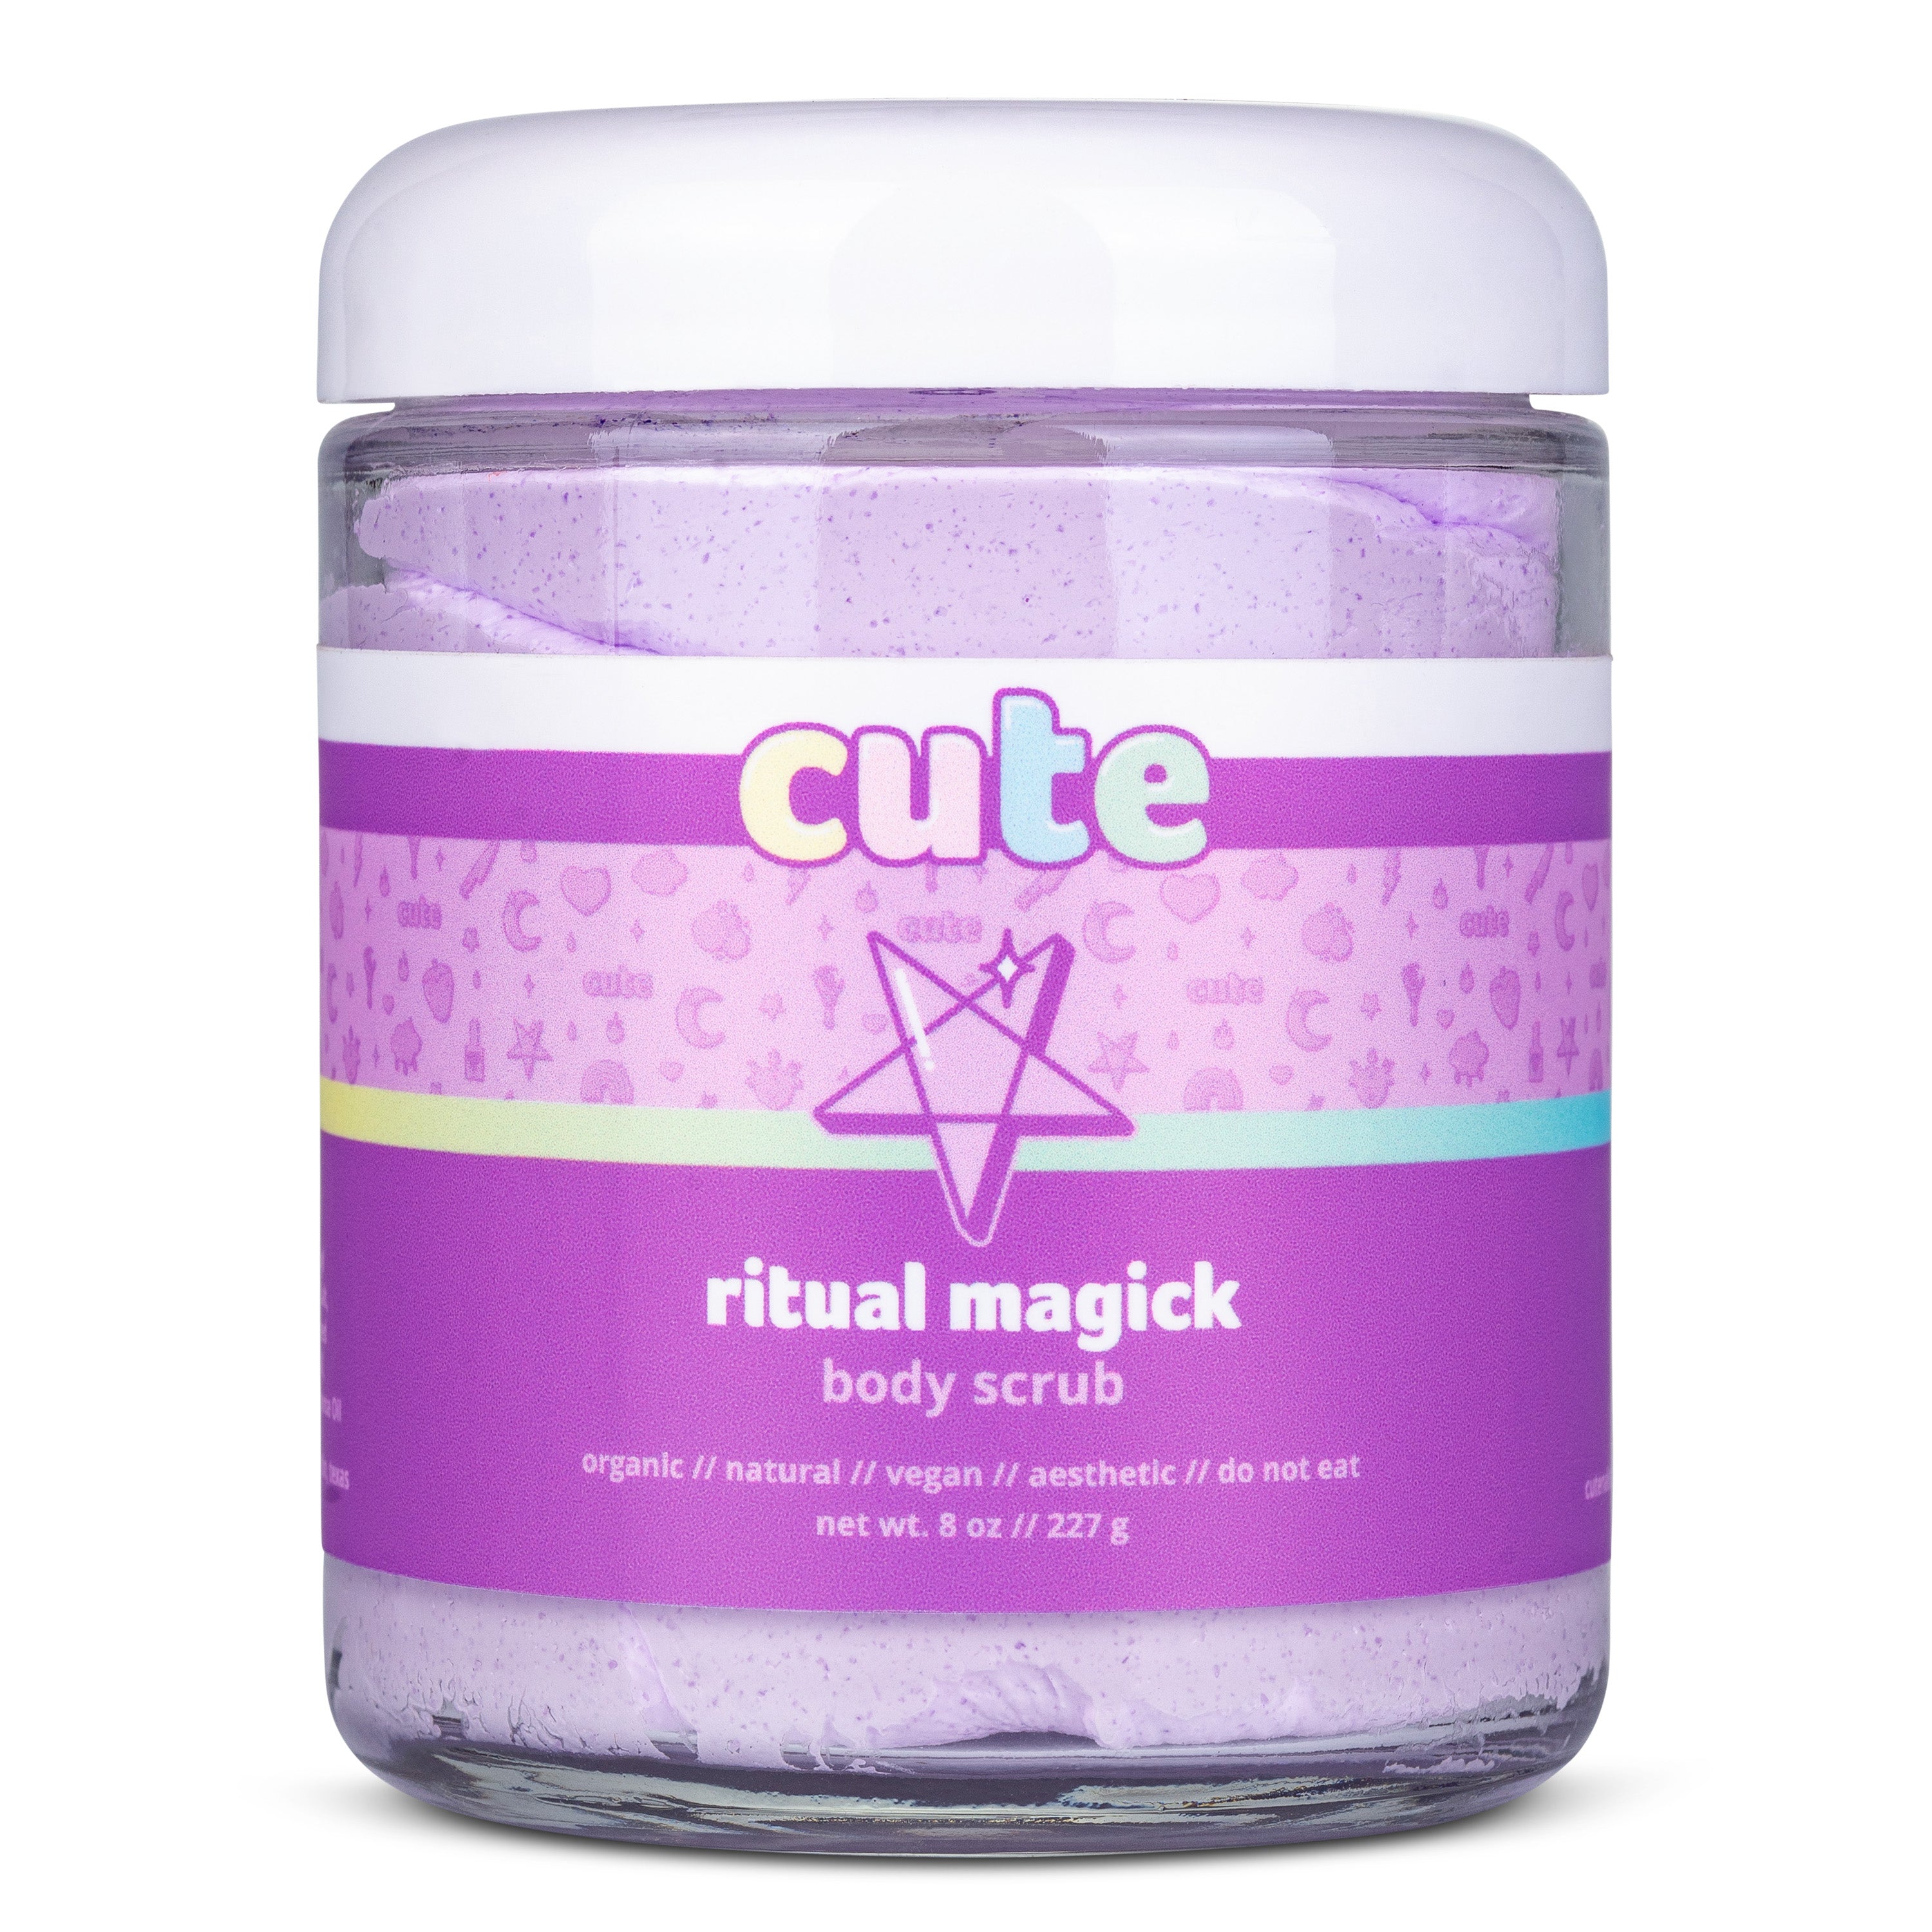 Ritual Magick sugar scrub